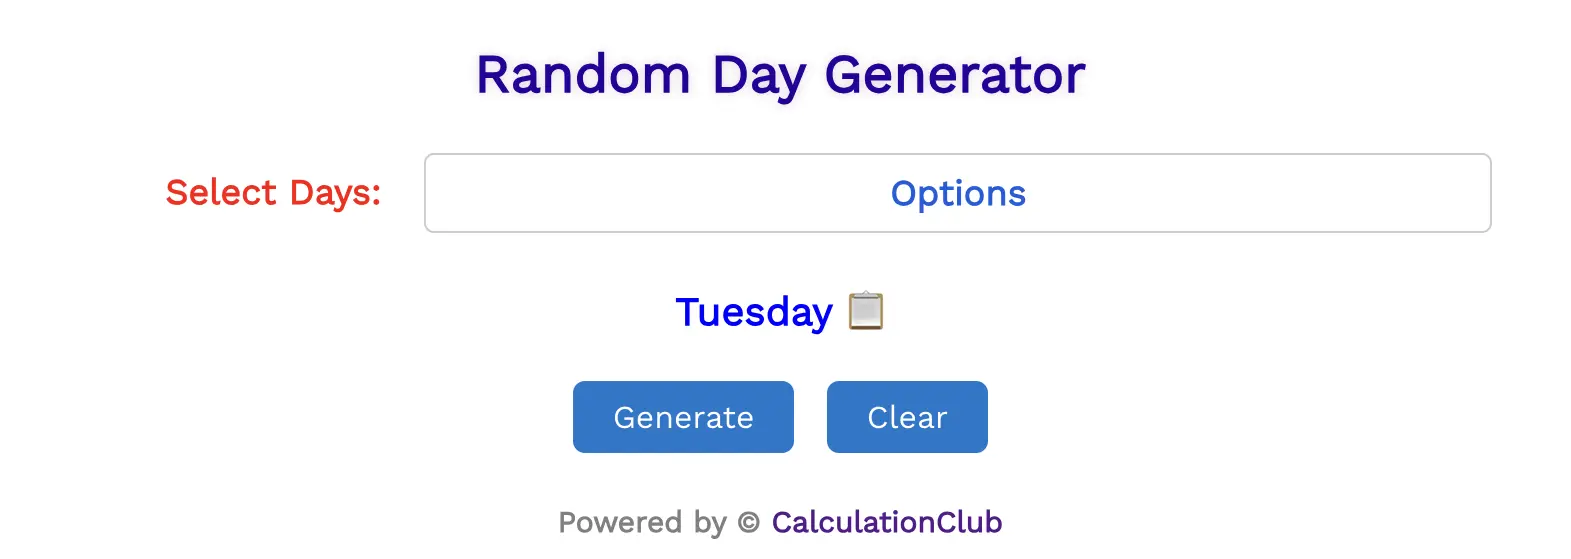 Random Day Generator 1